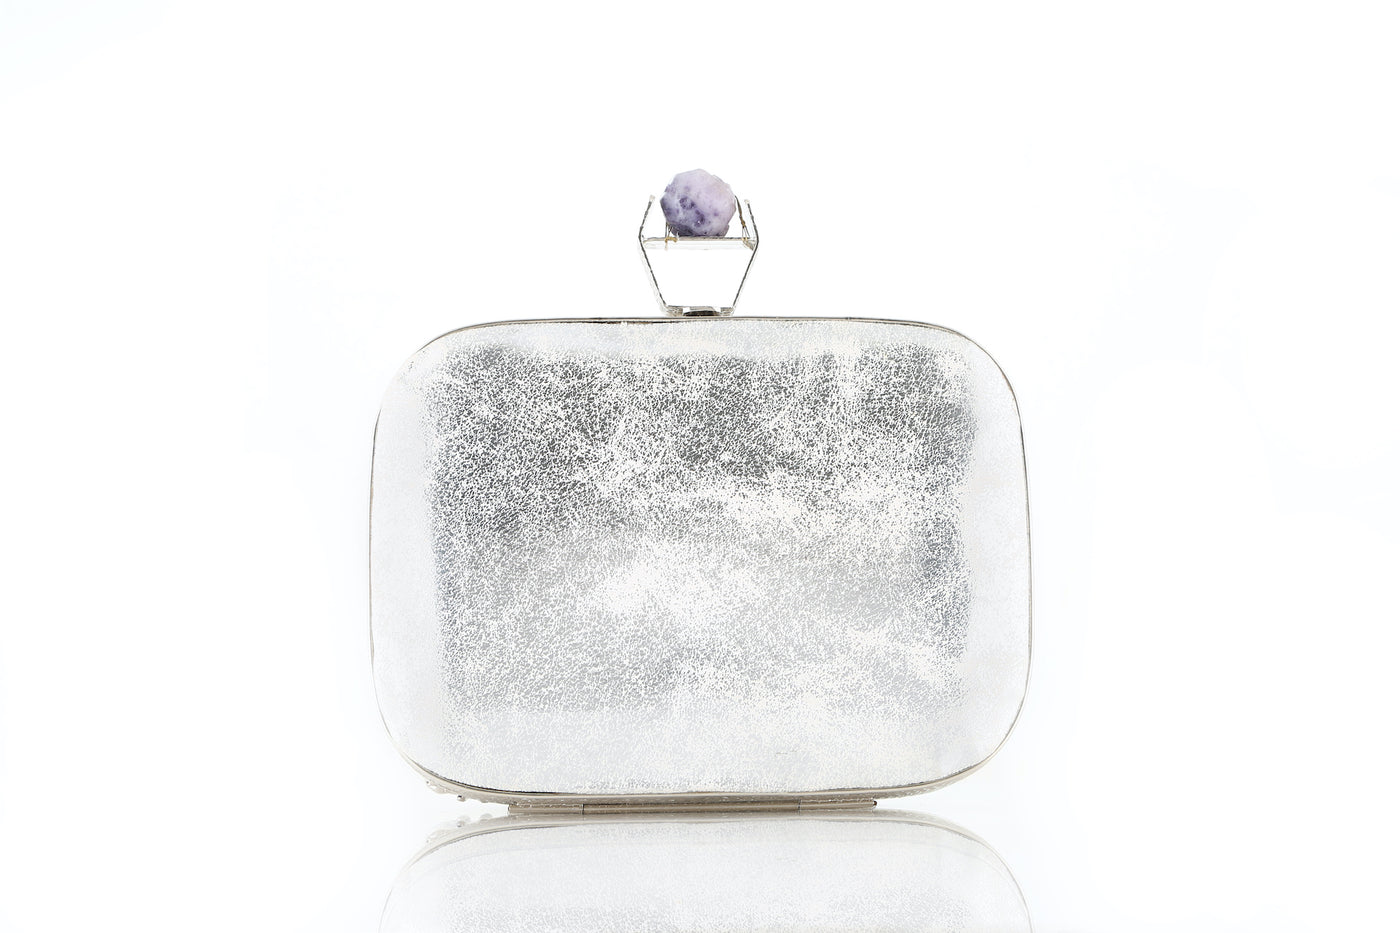 Veil Silver Clutch - Women's clutch bag